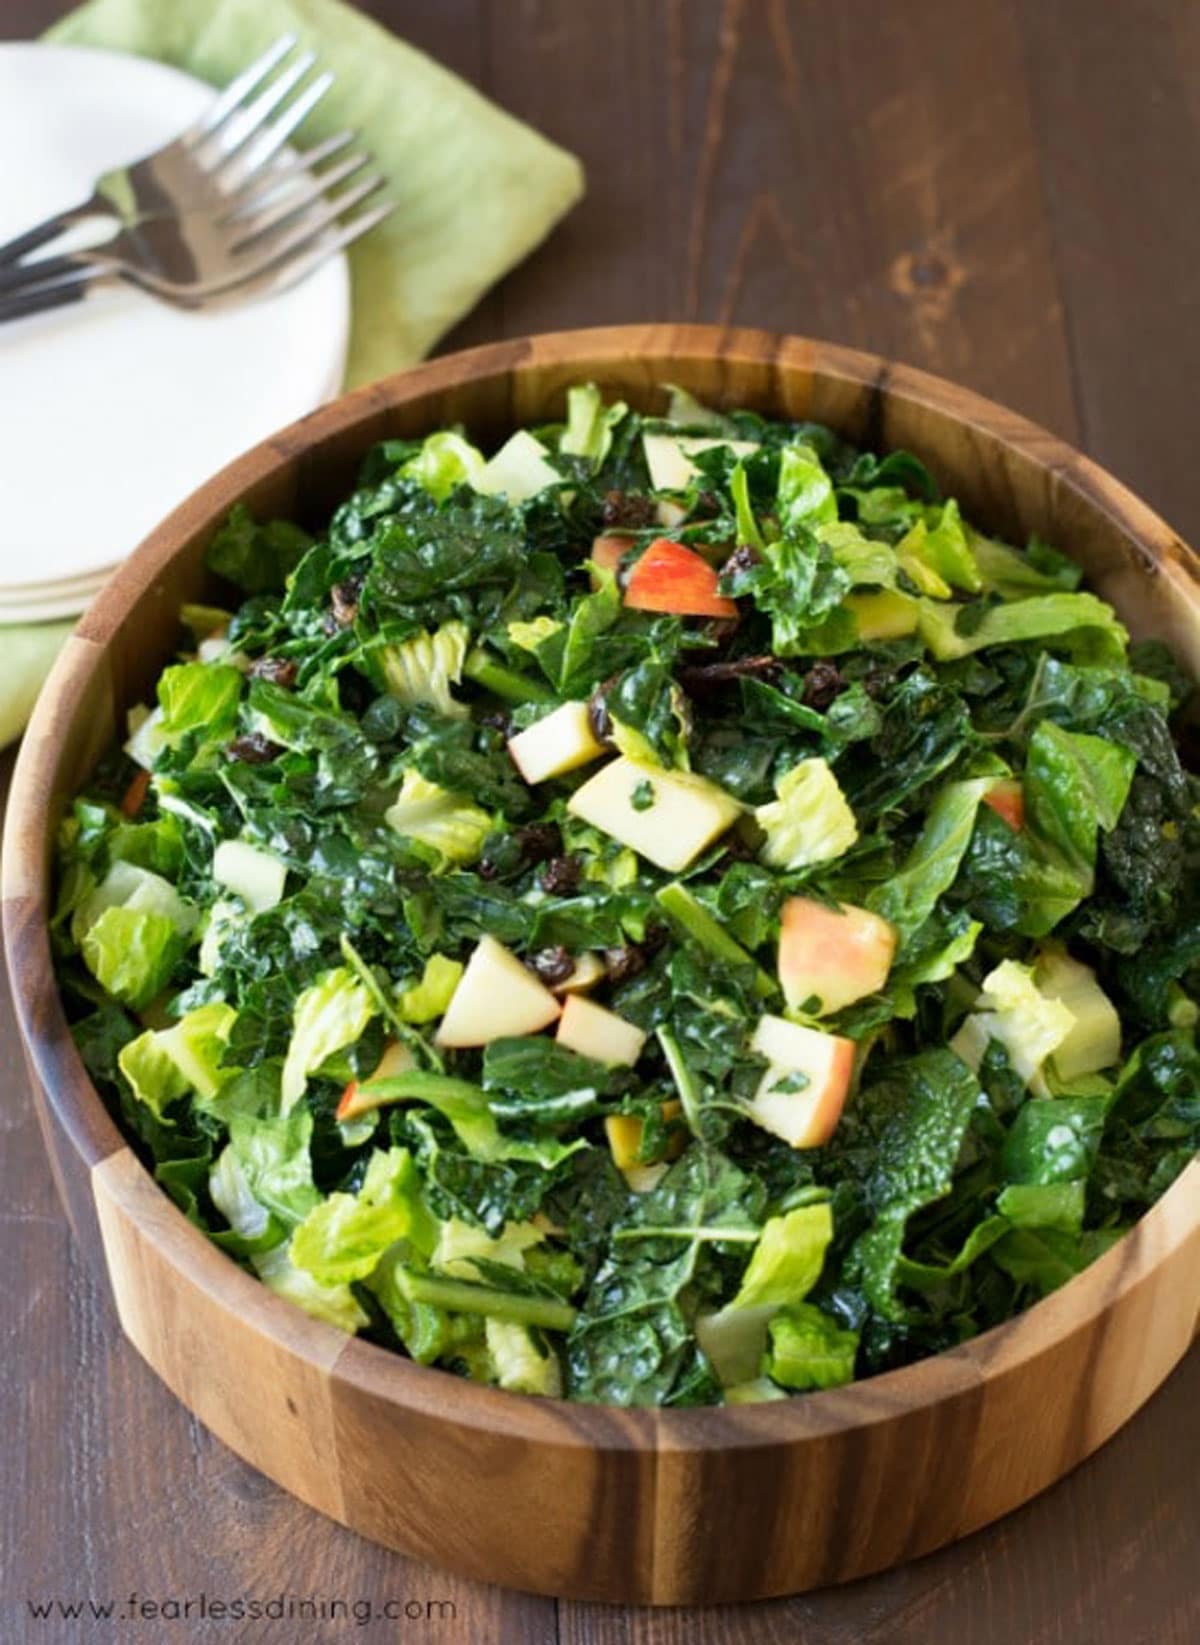 California Cafe's Gluten-Free Kale Salad